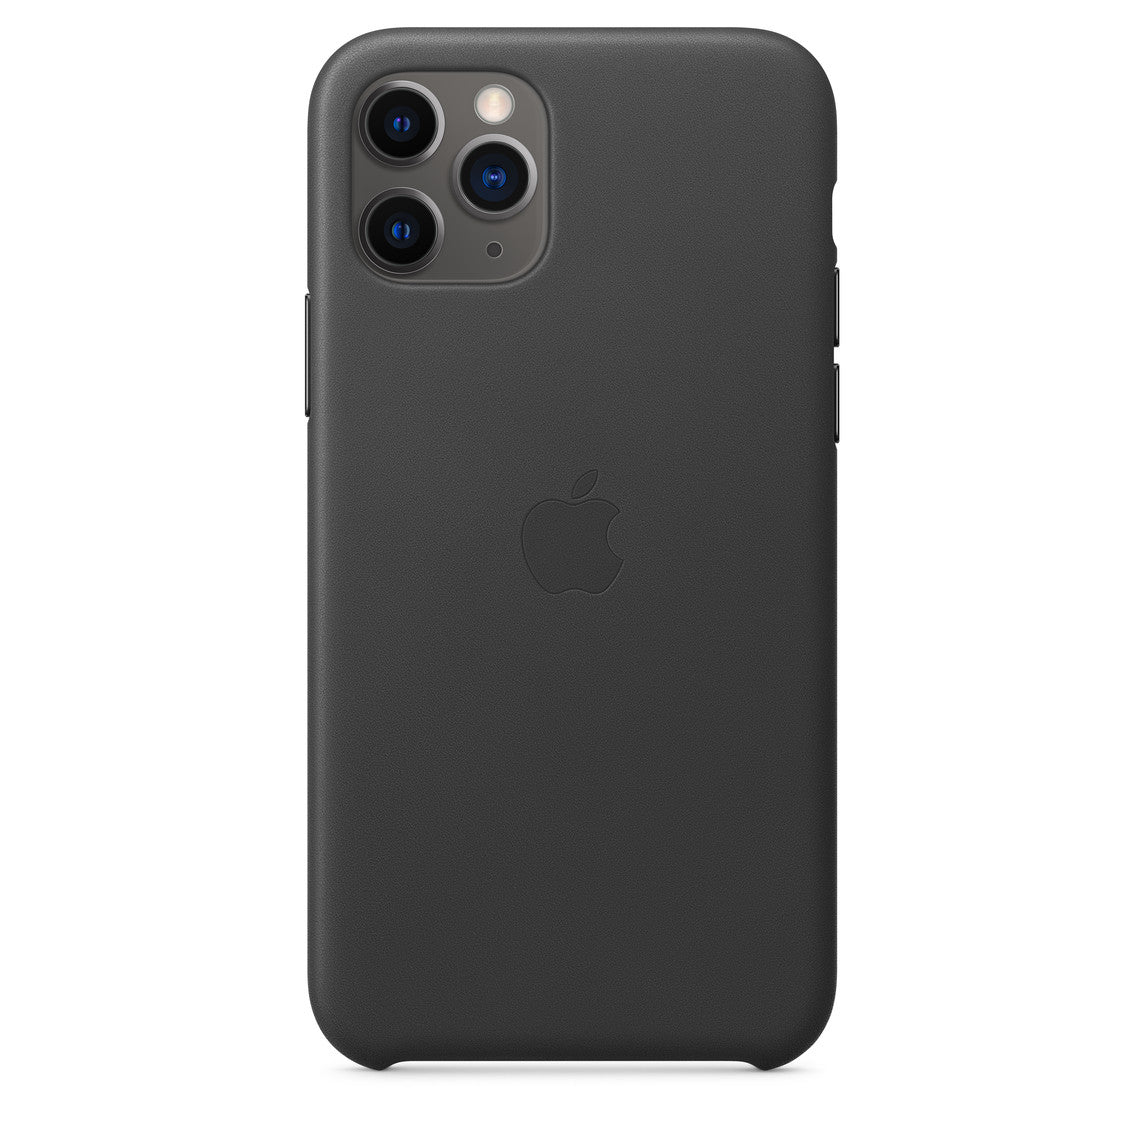 Apple iPhone 11 Pro Leather Case - Black  - Brand New